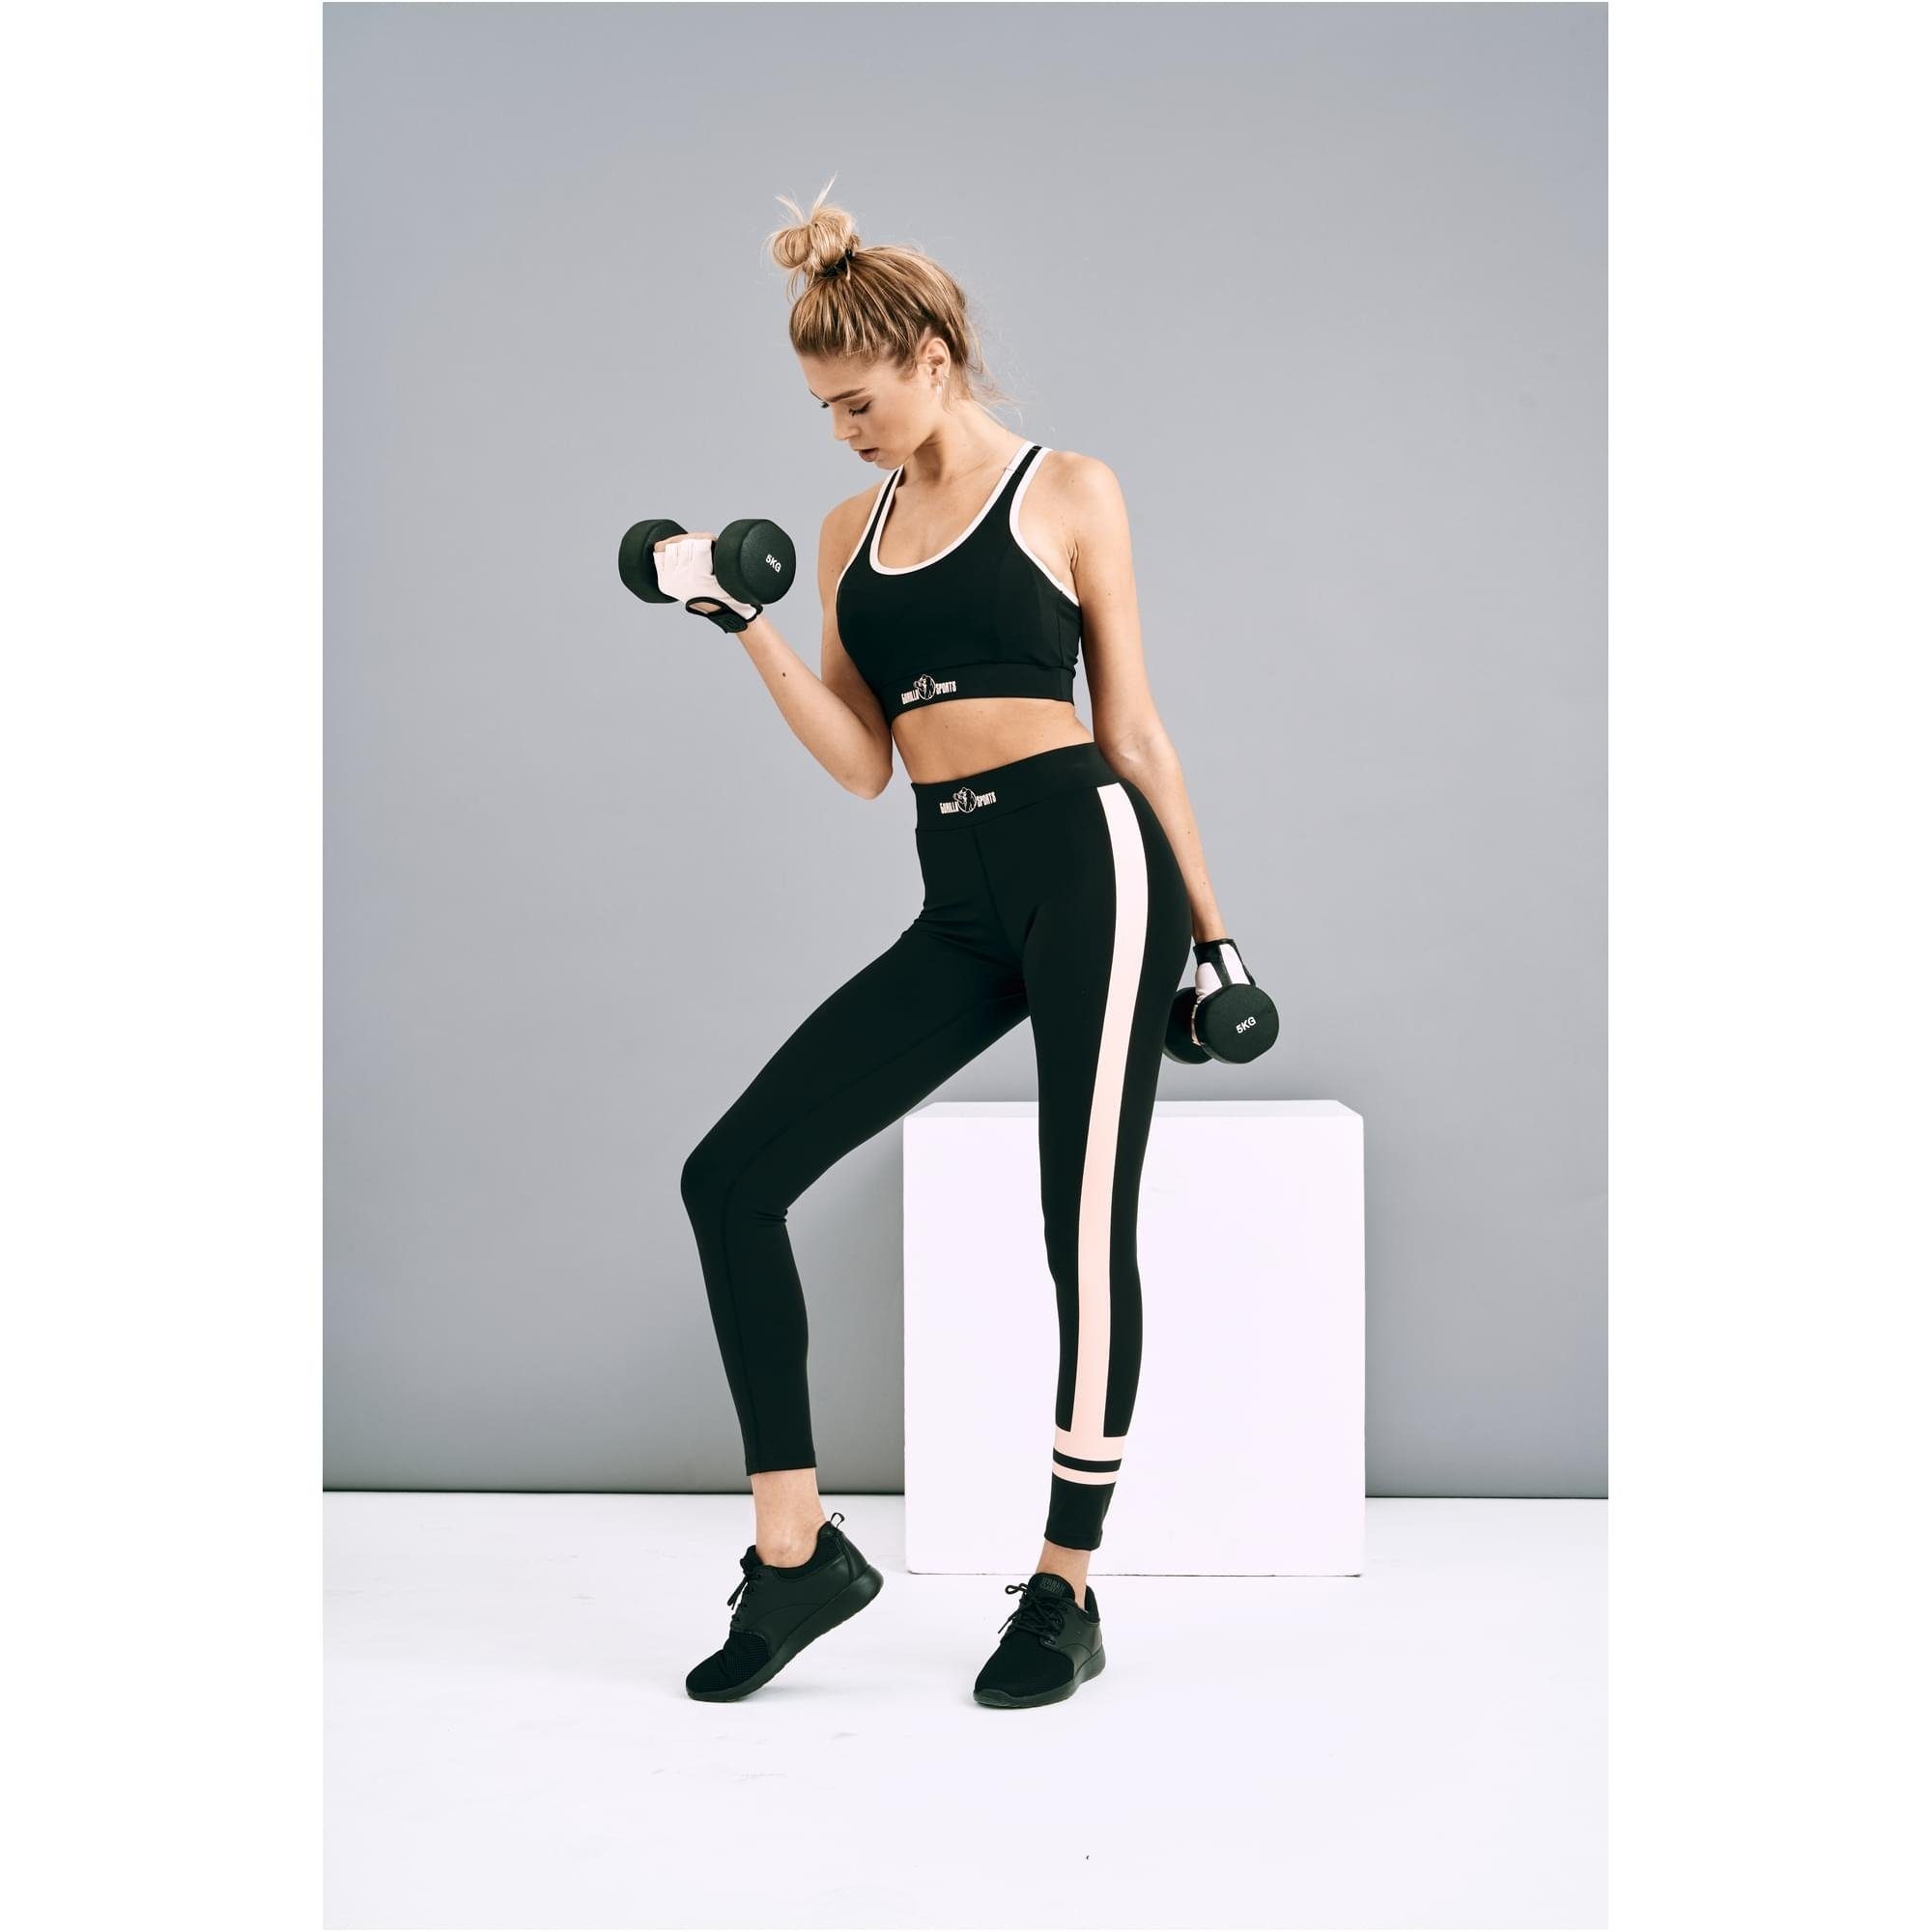 Fitness Farbwahl Leder, Sporthandschuhe Trainingshandschuhe Handschuhe - GORILLA SPORTS Rosa - XS/S/M/L/XL,